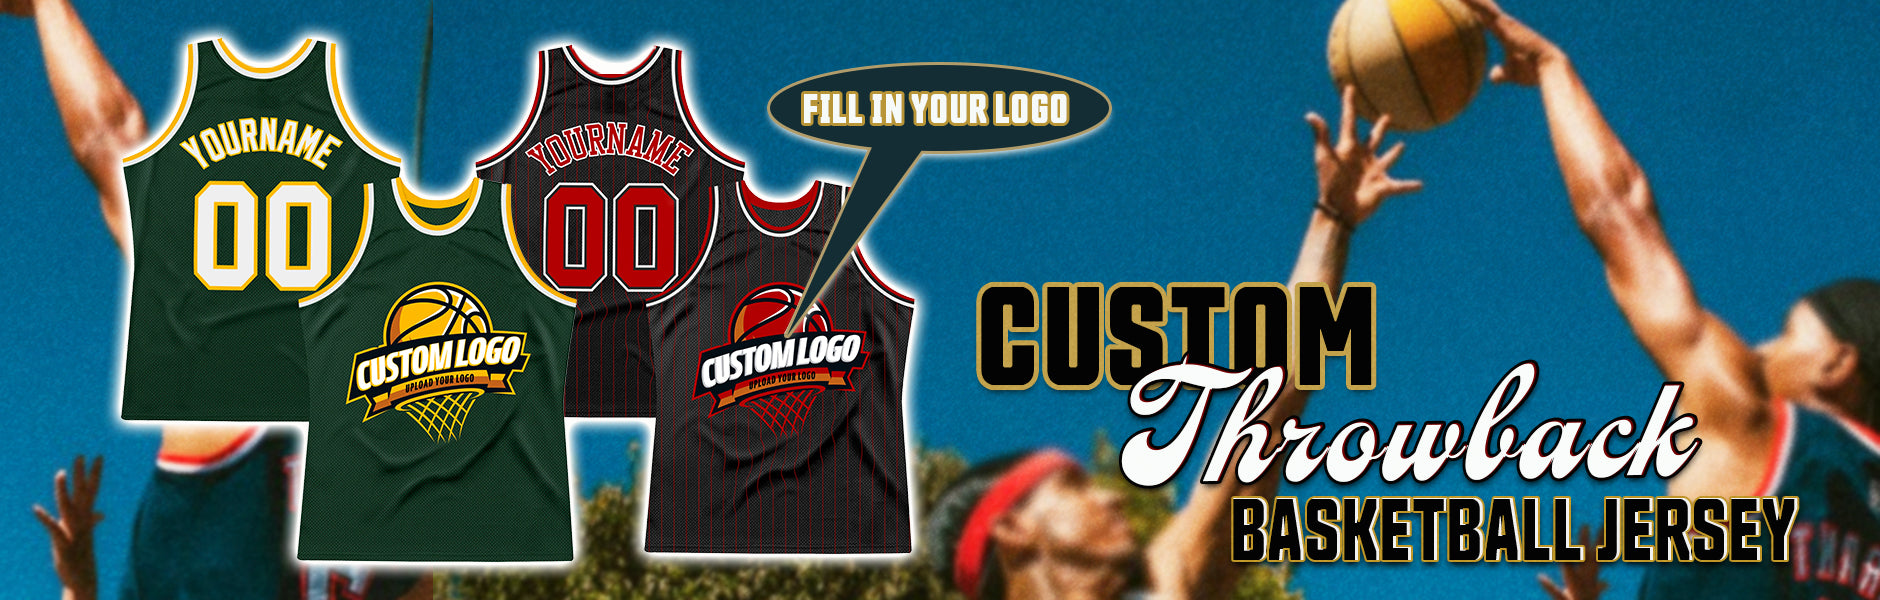 custom basketball front log jersey